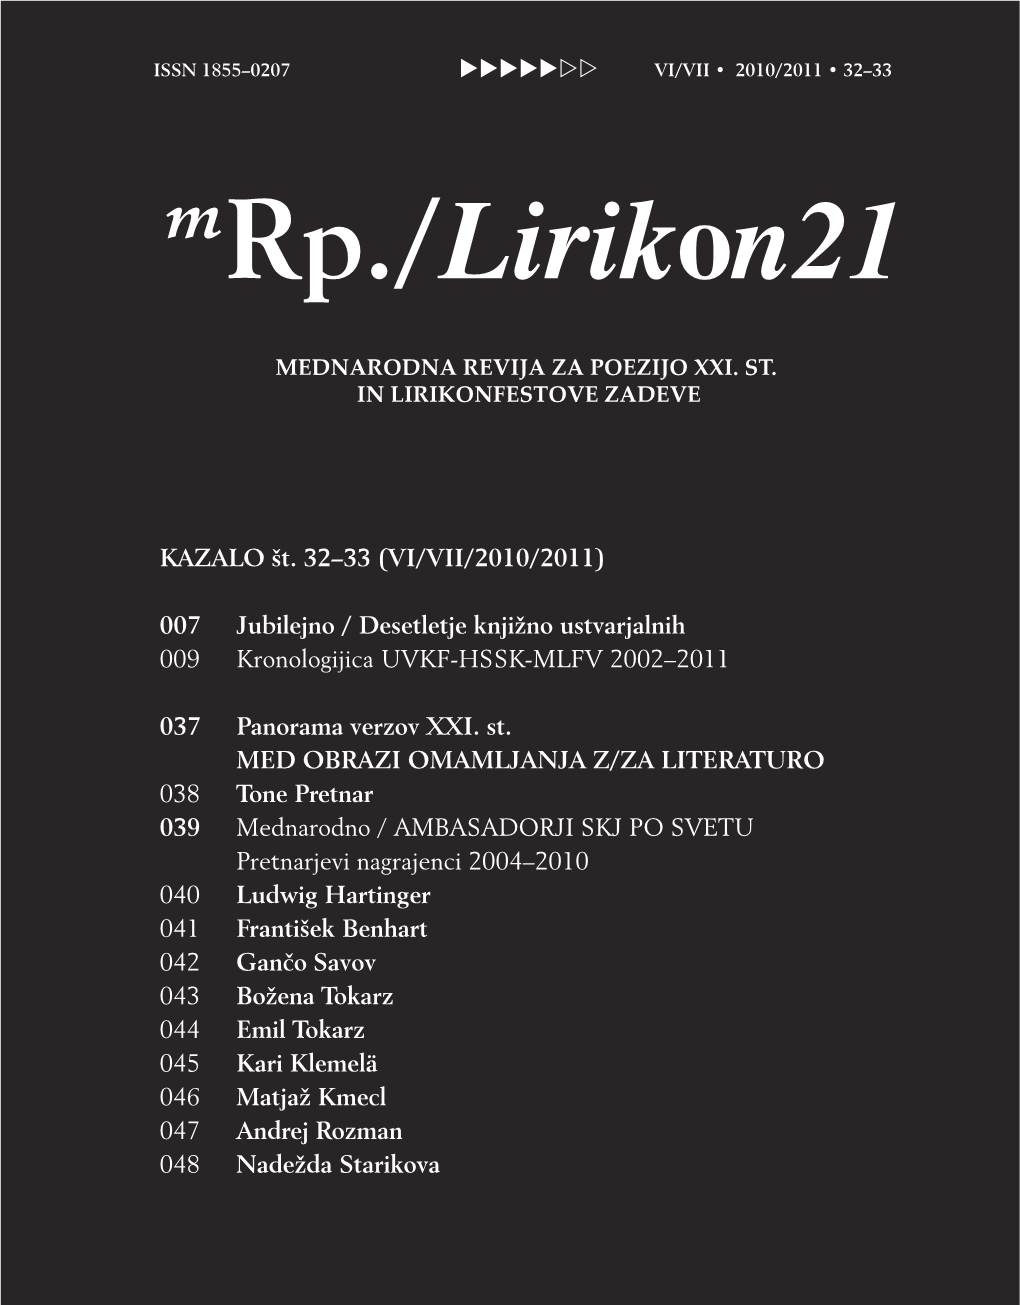 Rp./Lirikon21